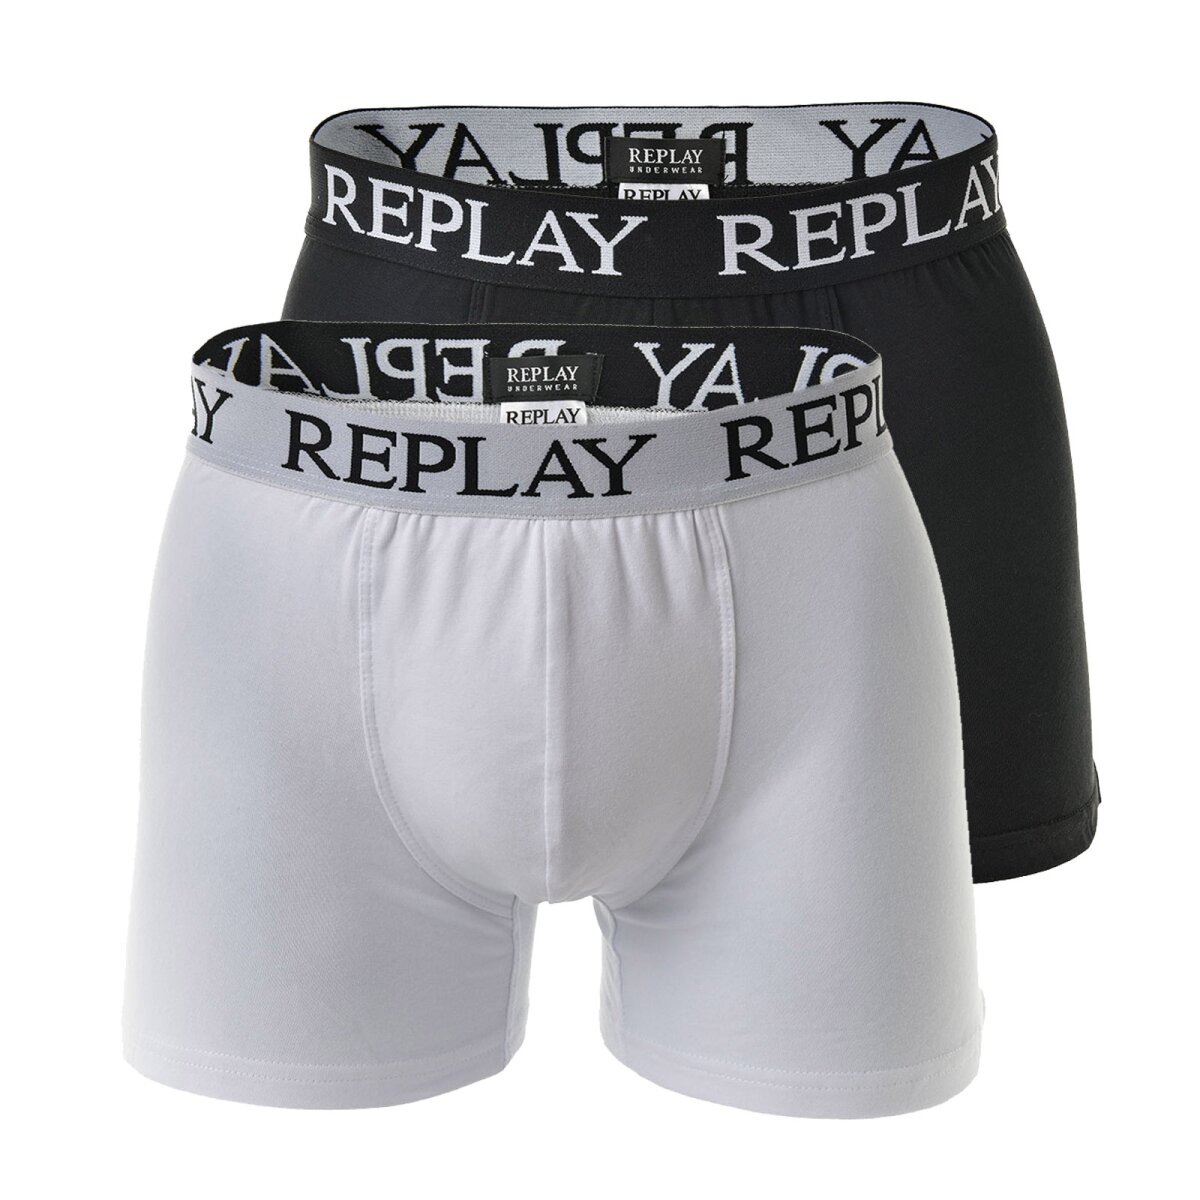 REPLAY Herren Boxer Shorts, 2er Pack - Trunks, Cotton Stretch, 21,45 €